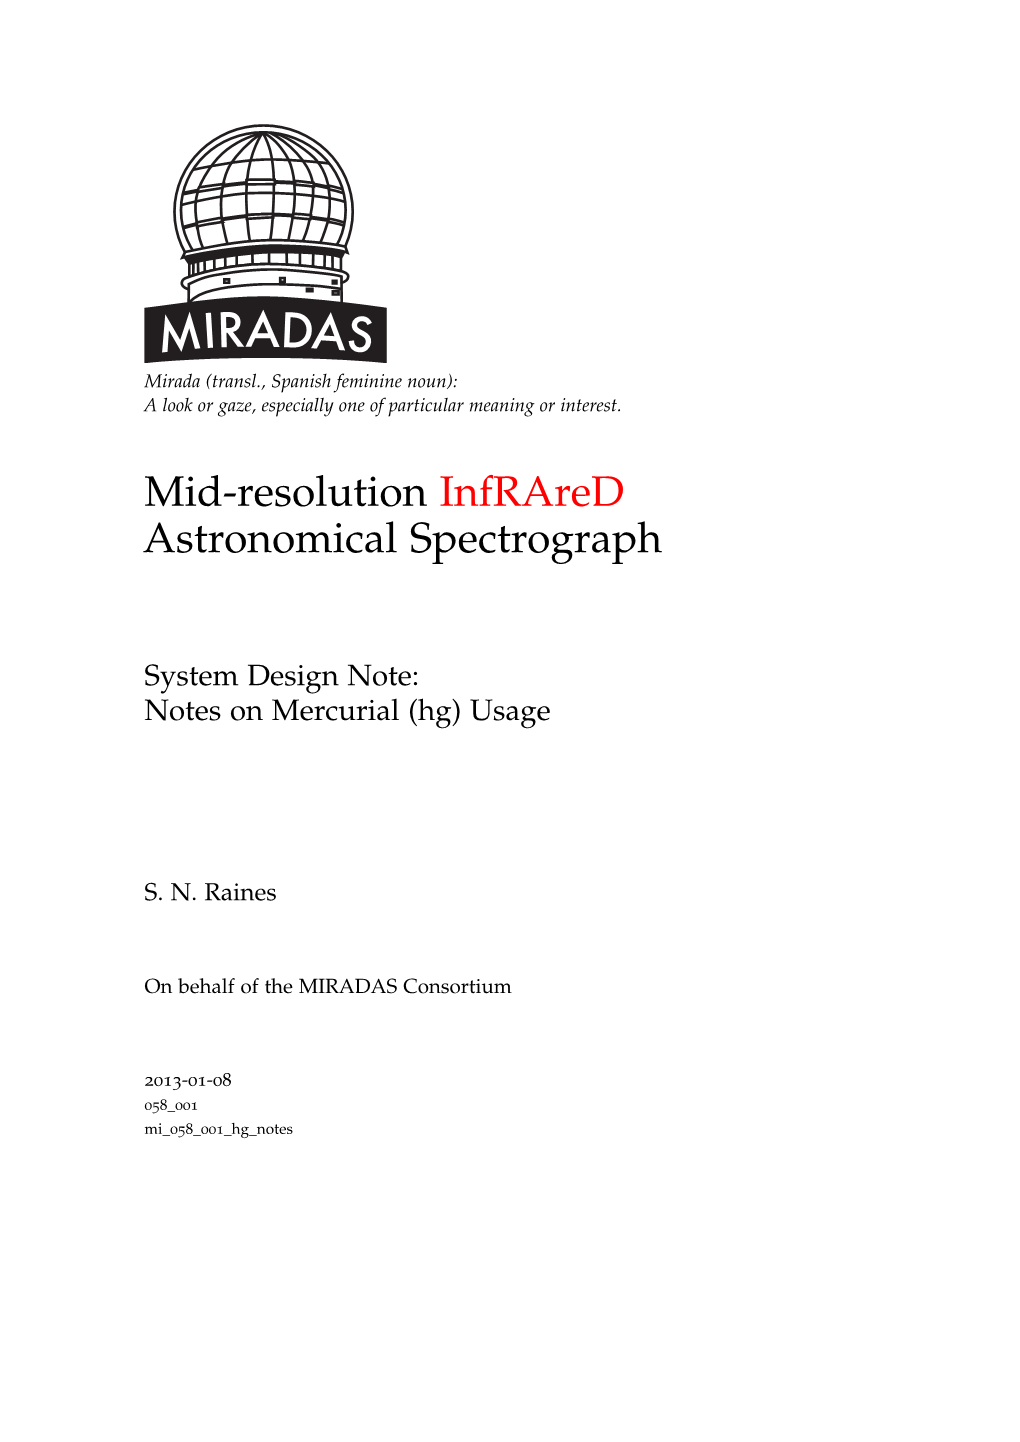 MIRADAS SDN 058, Notes on Mercurial Usage